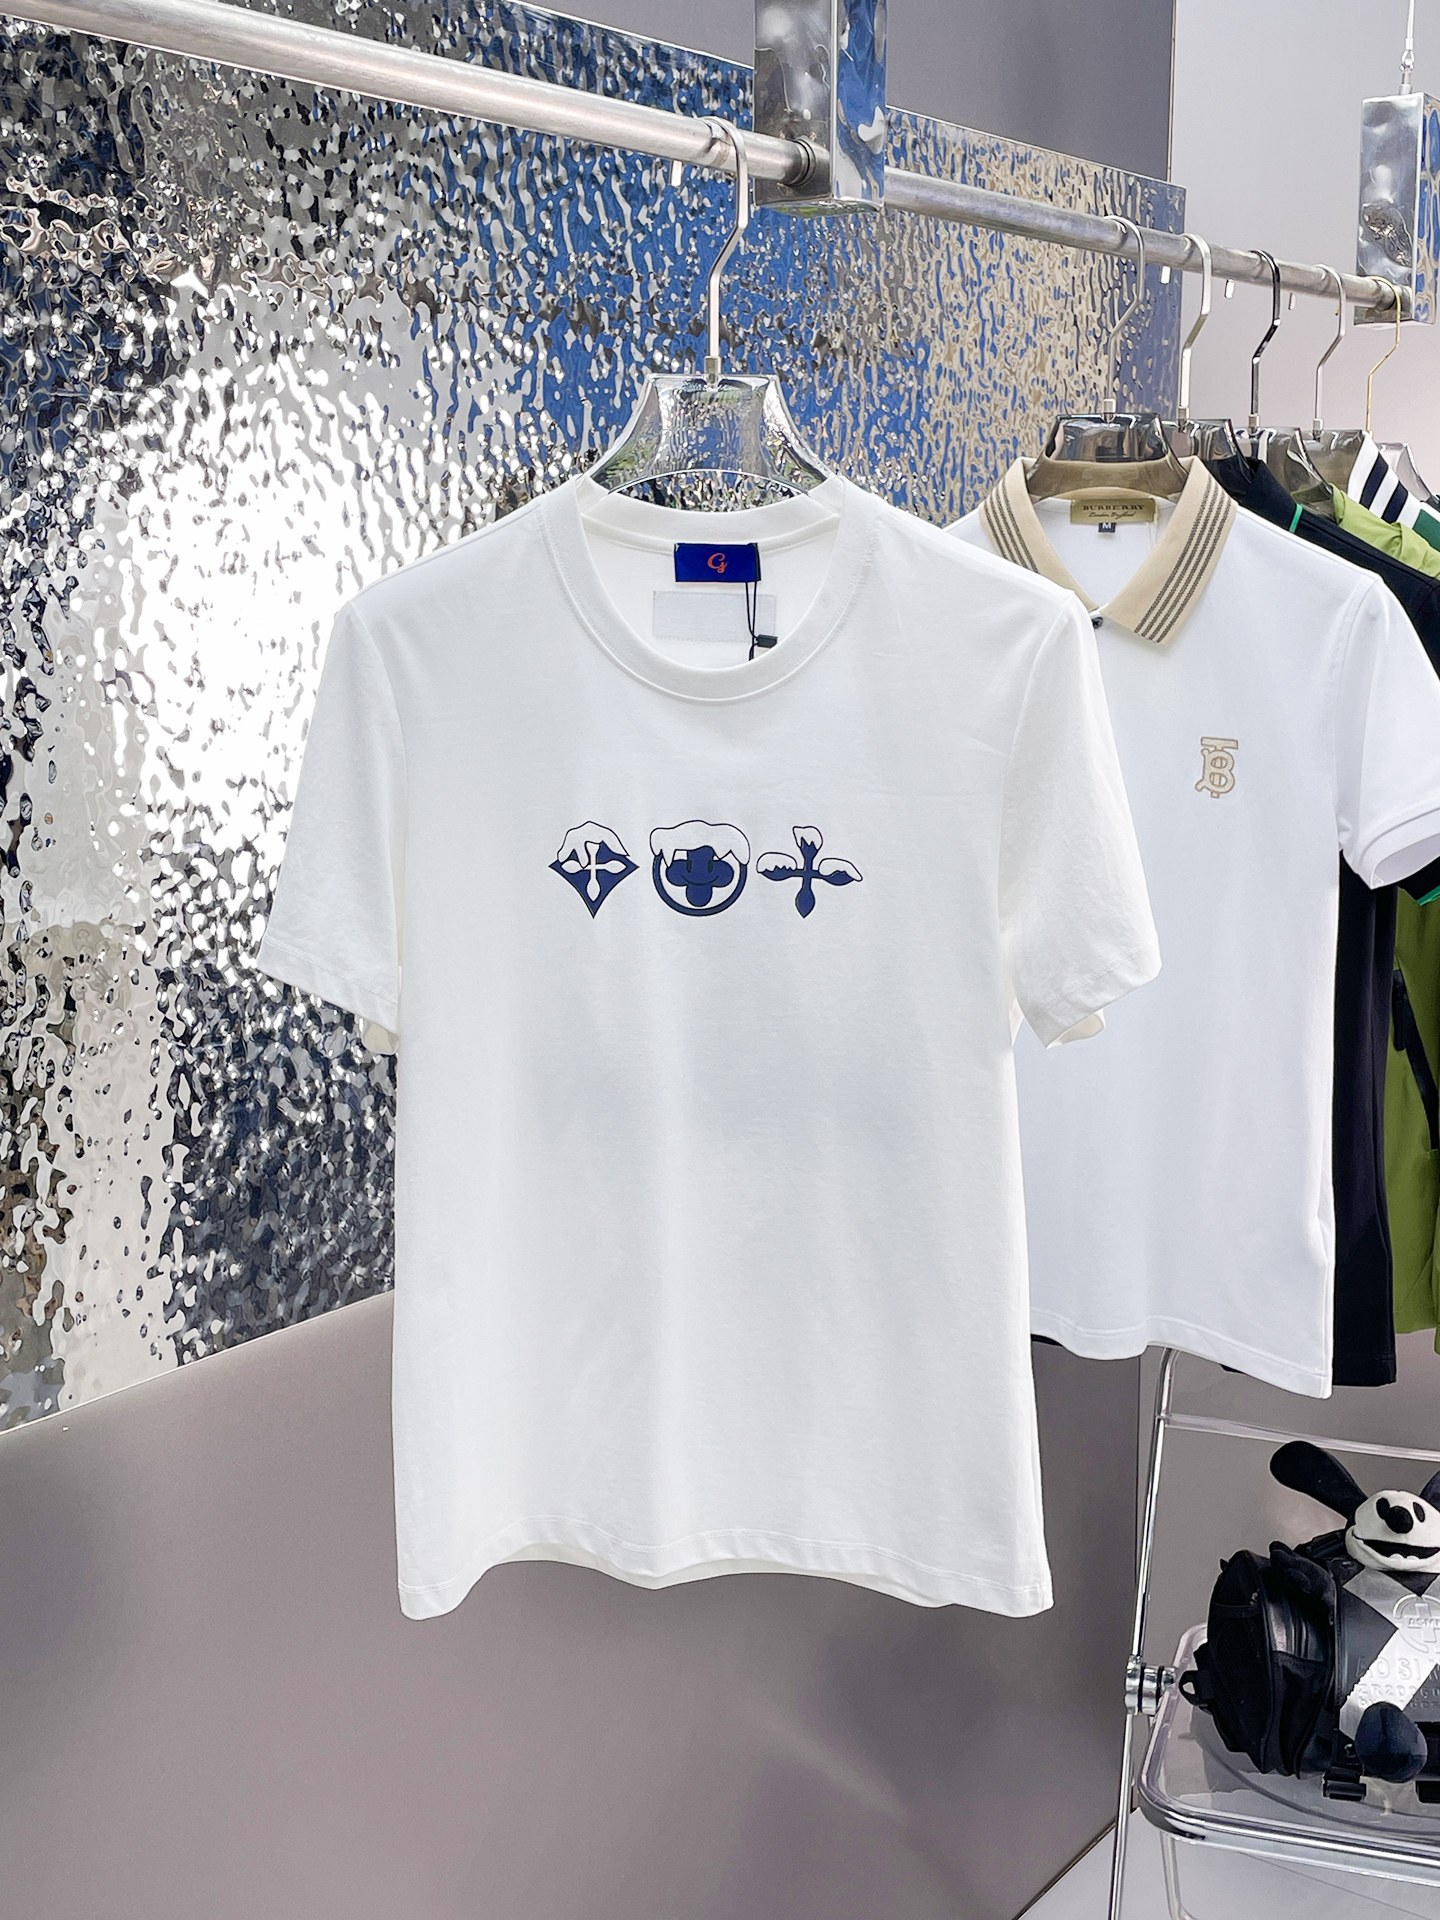 Louis Vuitton Clothing T-Shirt Top Grade
 Summer Collection Fashion Short Sleeve